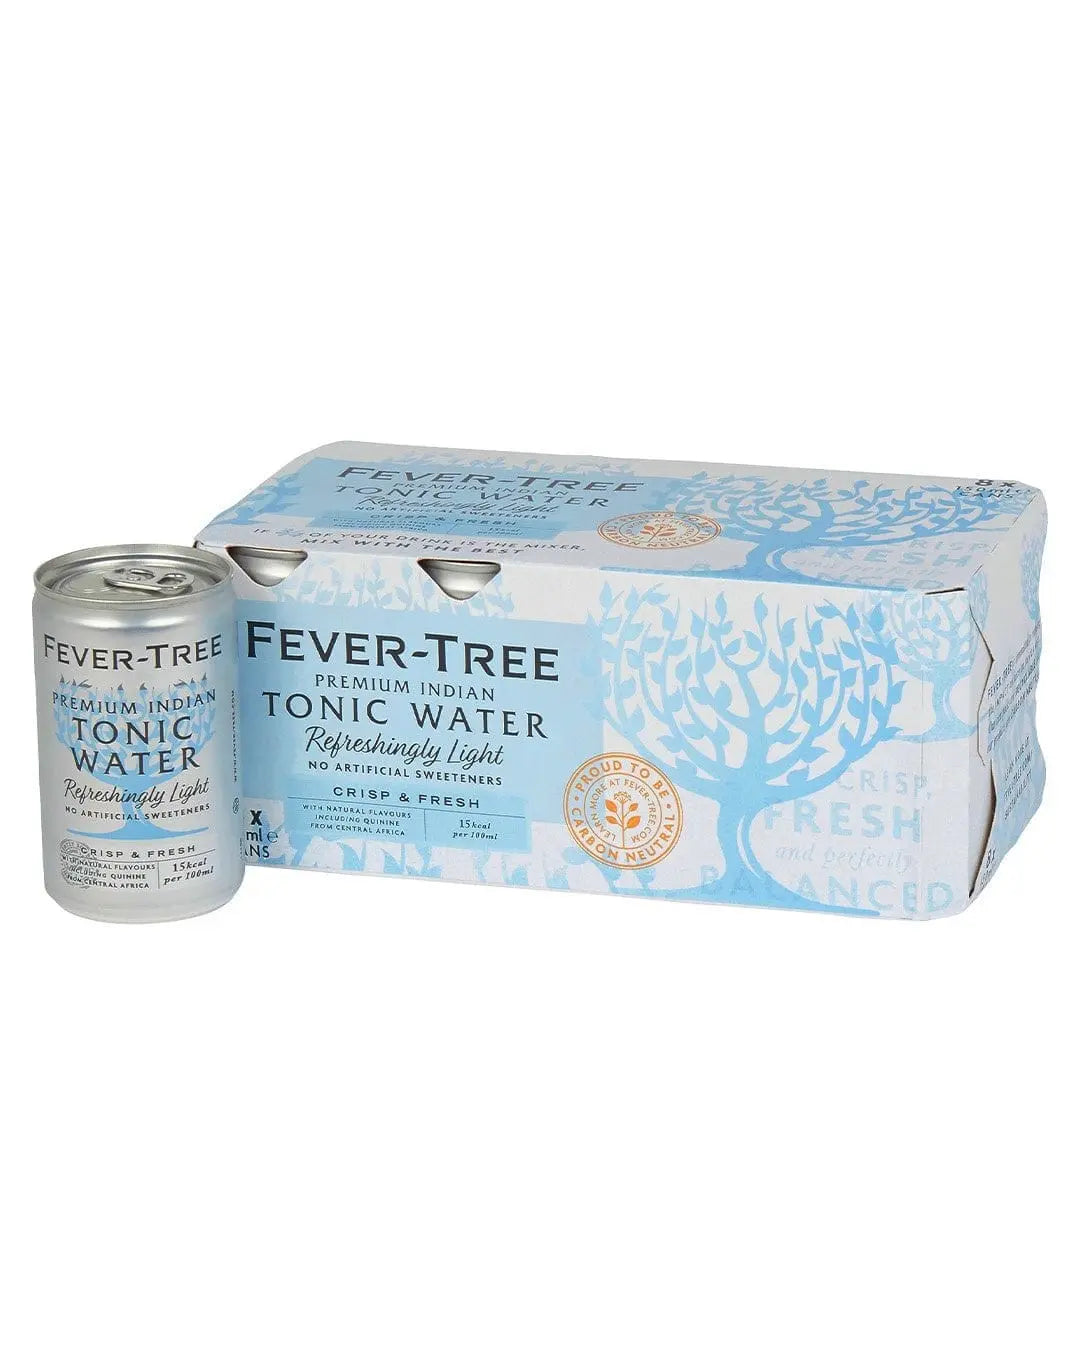 Fever-Tree Refreshingly Light Indian Tonic Water Fridge Pack, 8 x 150 ml Tonics